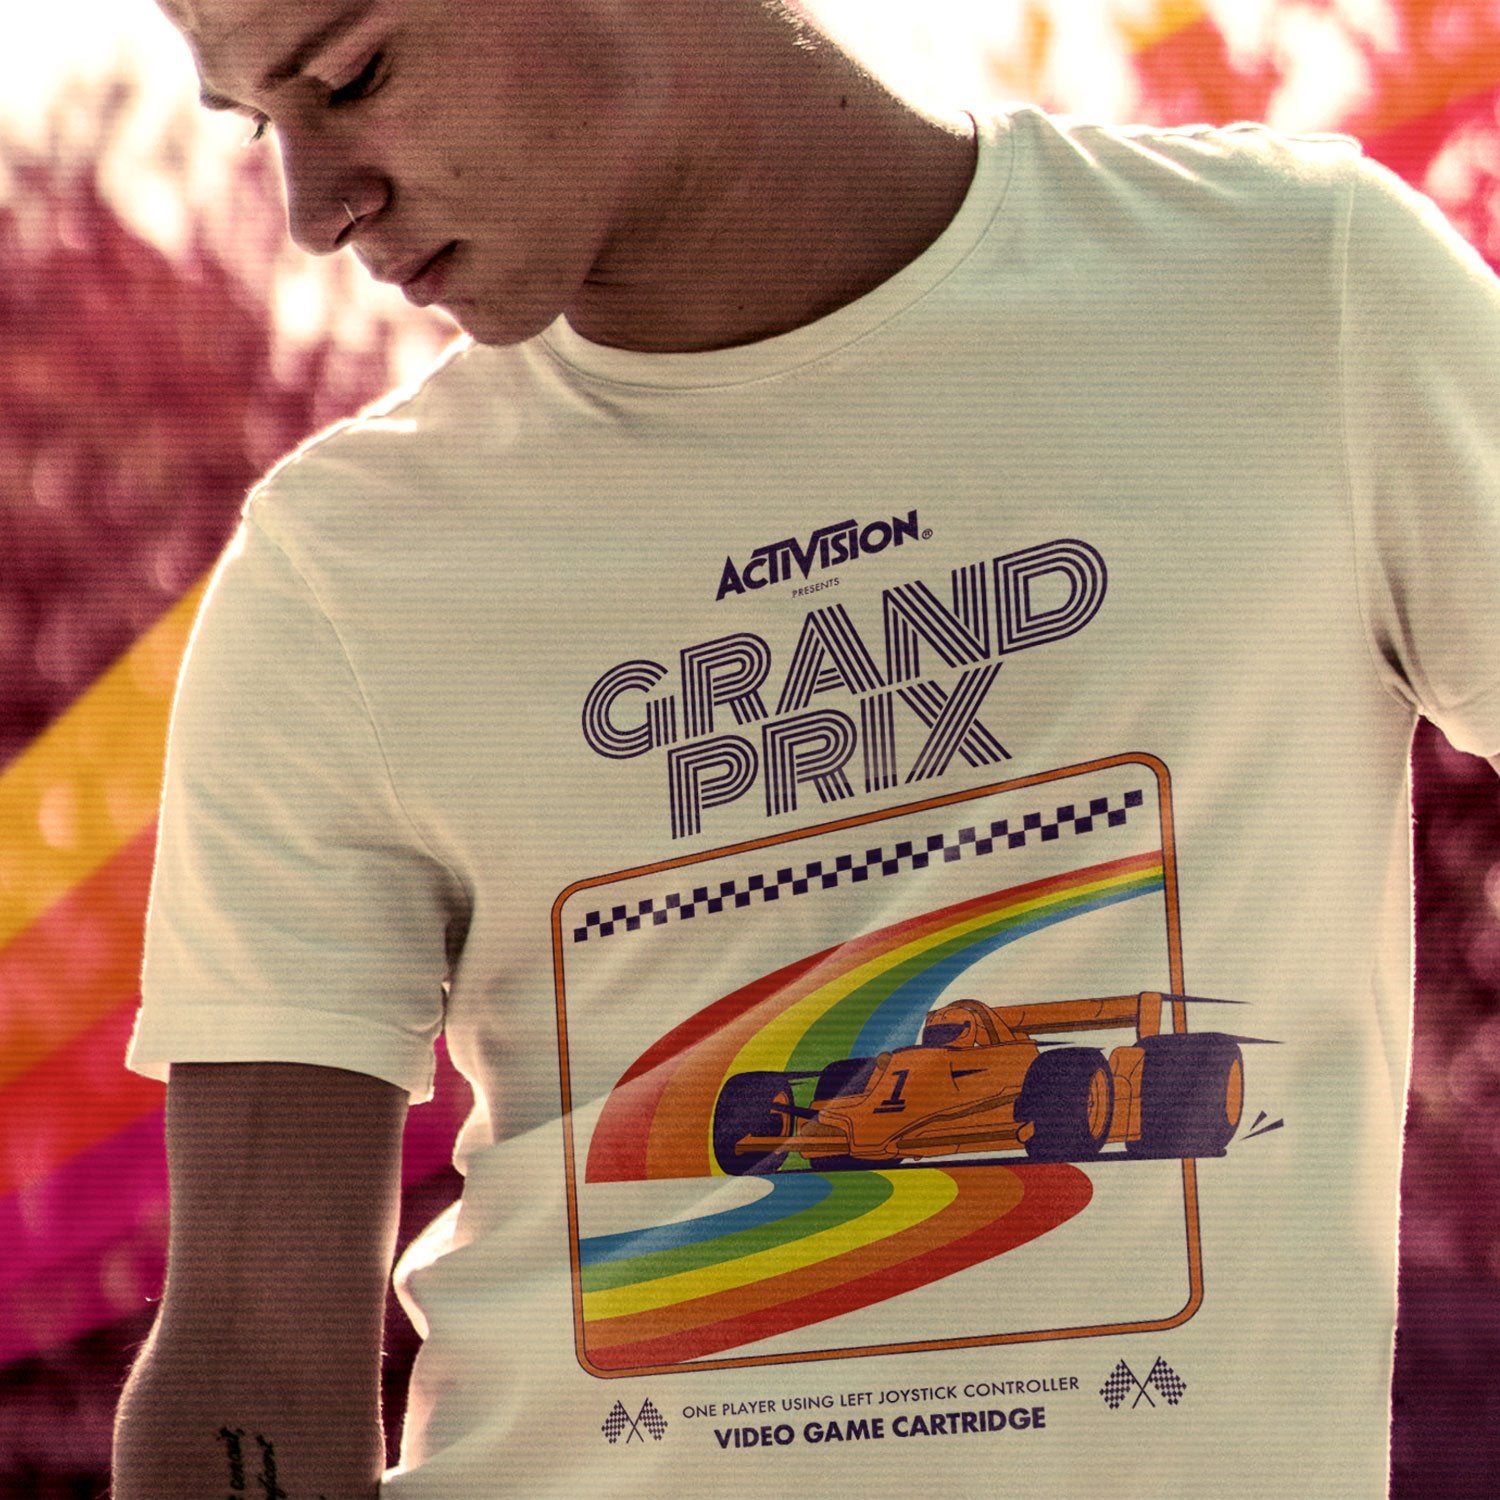 Activision Grand Prix Men's T-shirt, Cartridge Art Design on Natural White Tee